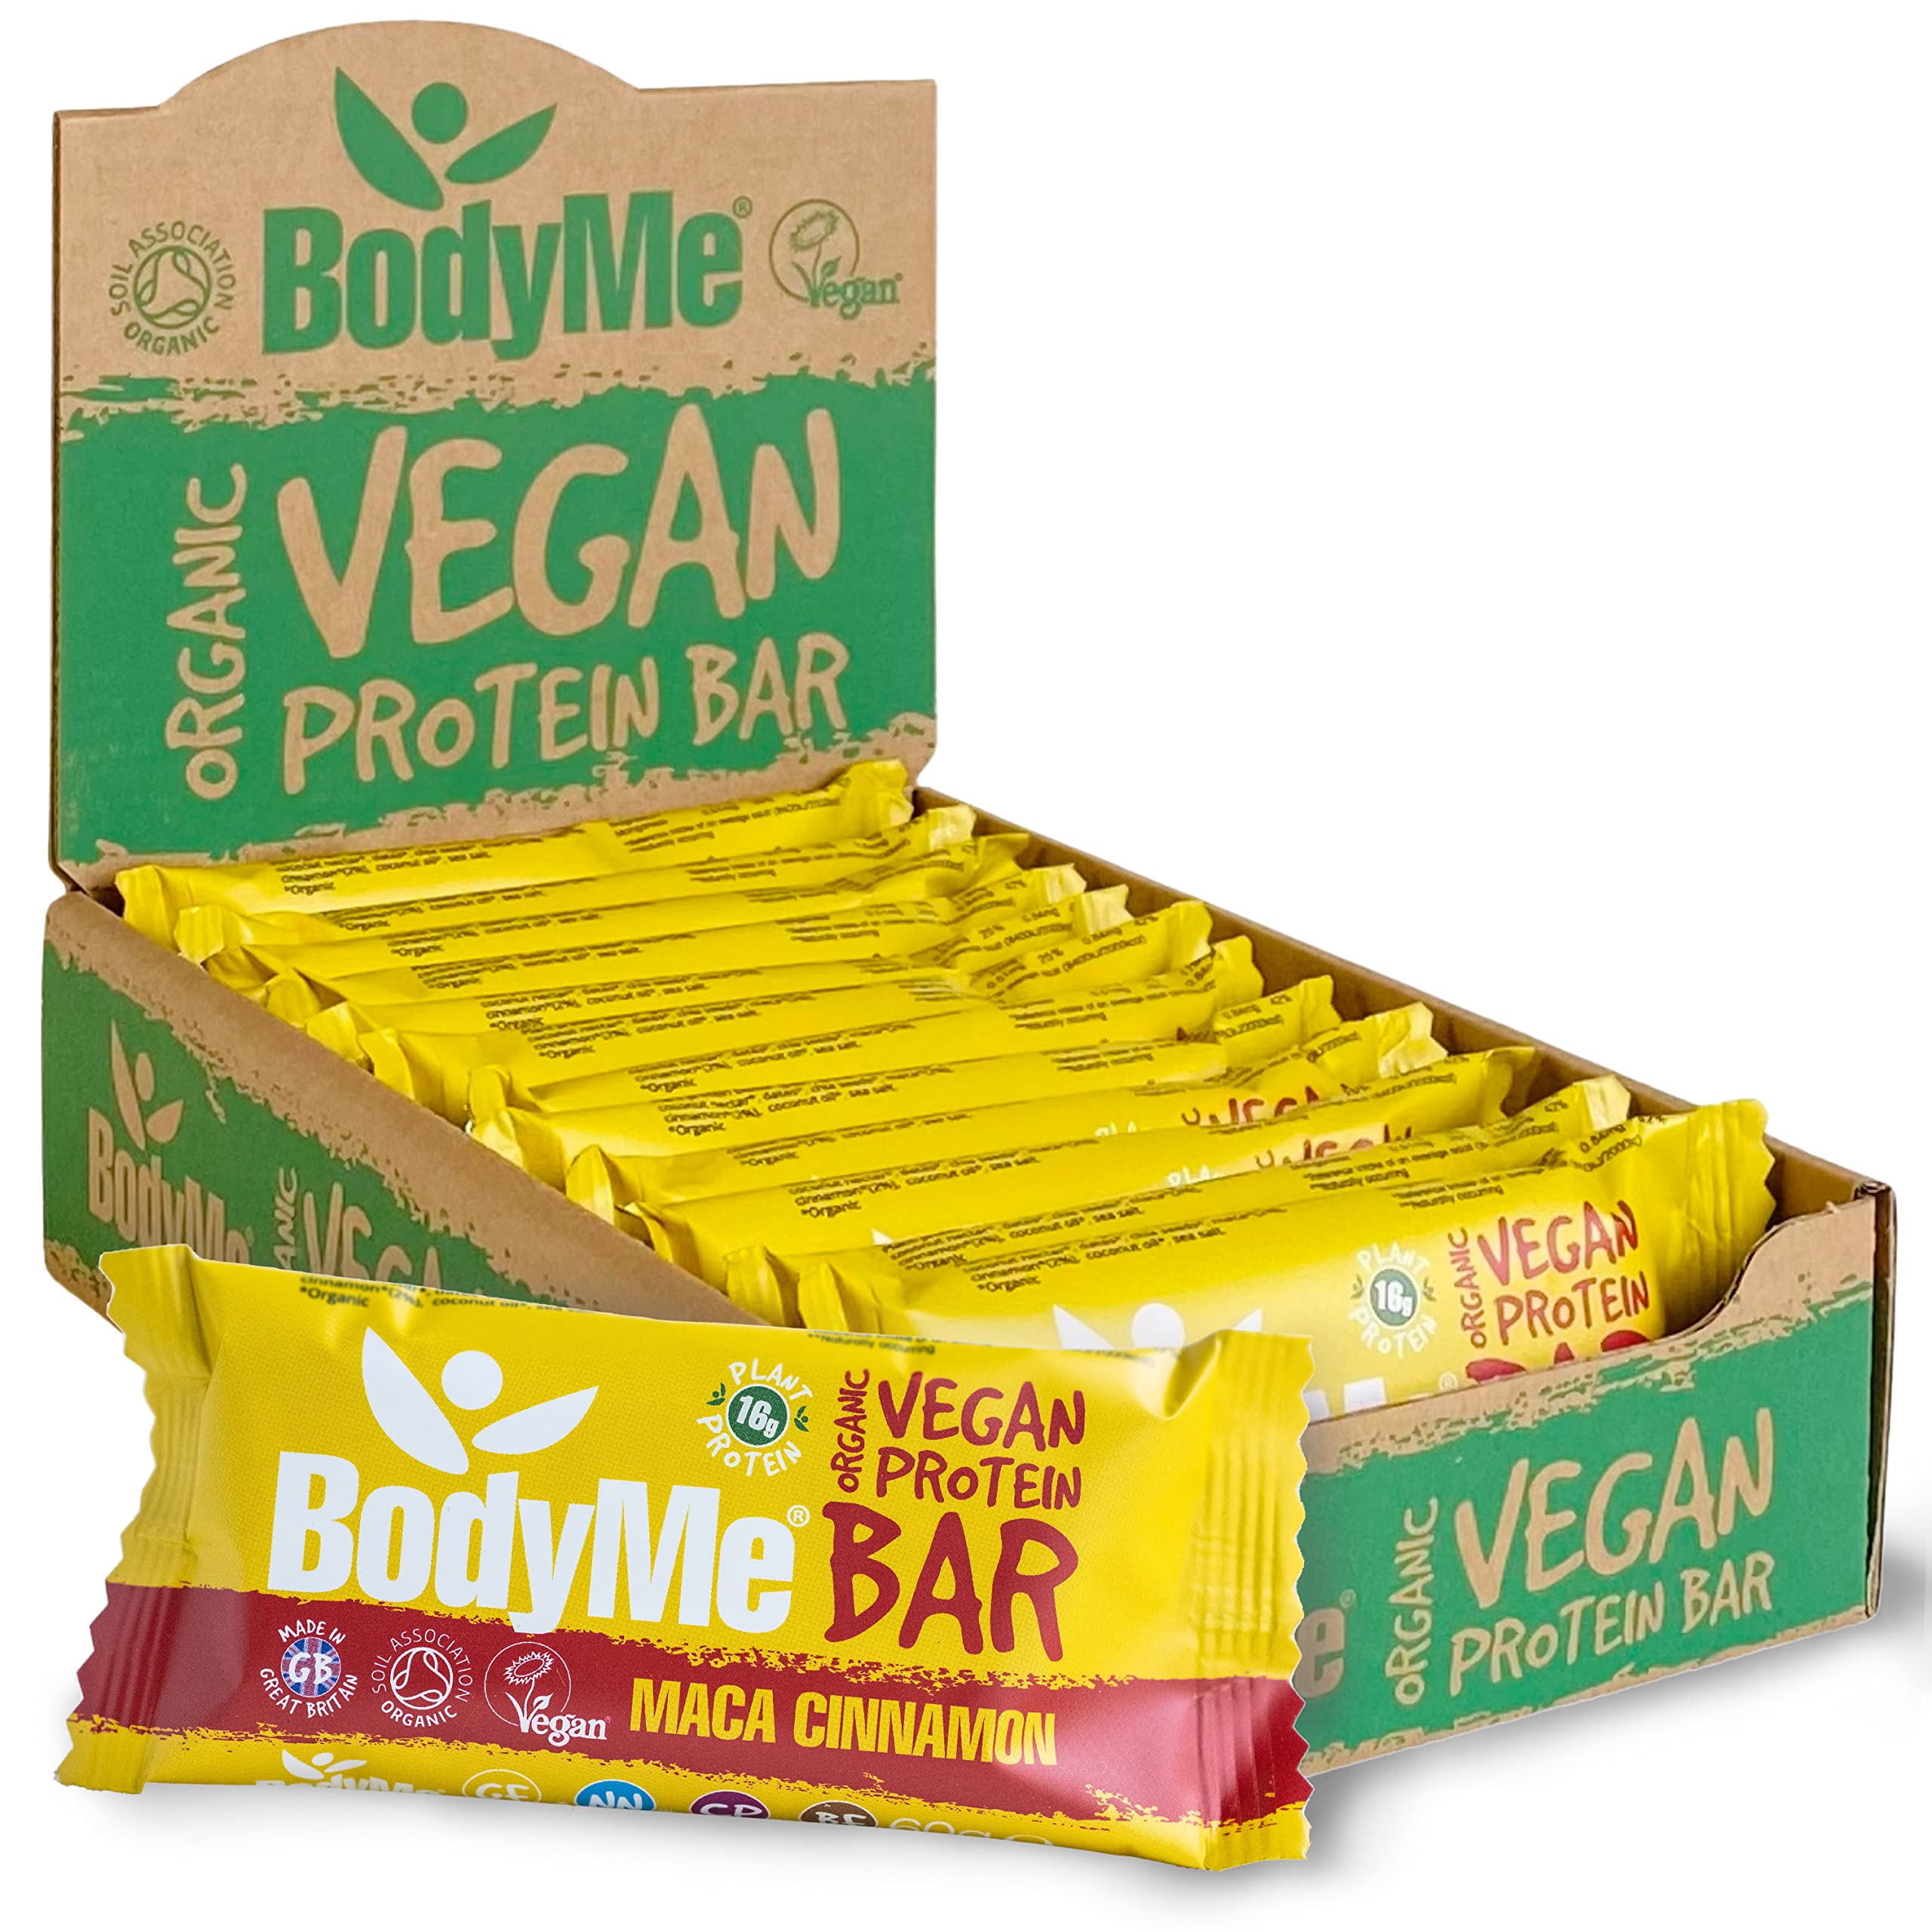 BodyMe Bio Vegan Protein Bar Raw Maca Cinnamon 12 x 60 g Vegan Protein Bar Gluten Free 16 g Complete Vegan Protein Snack 3 Proteins All Essential Amino Acids Fitness Bar